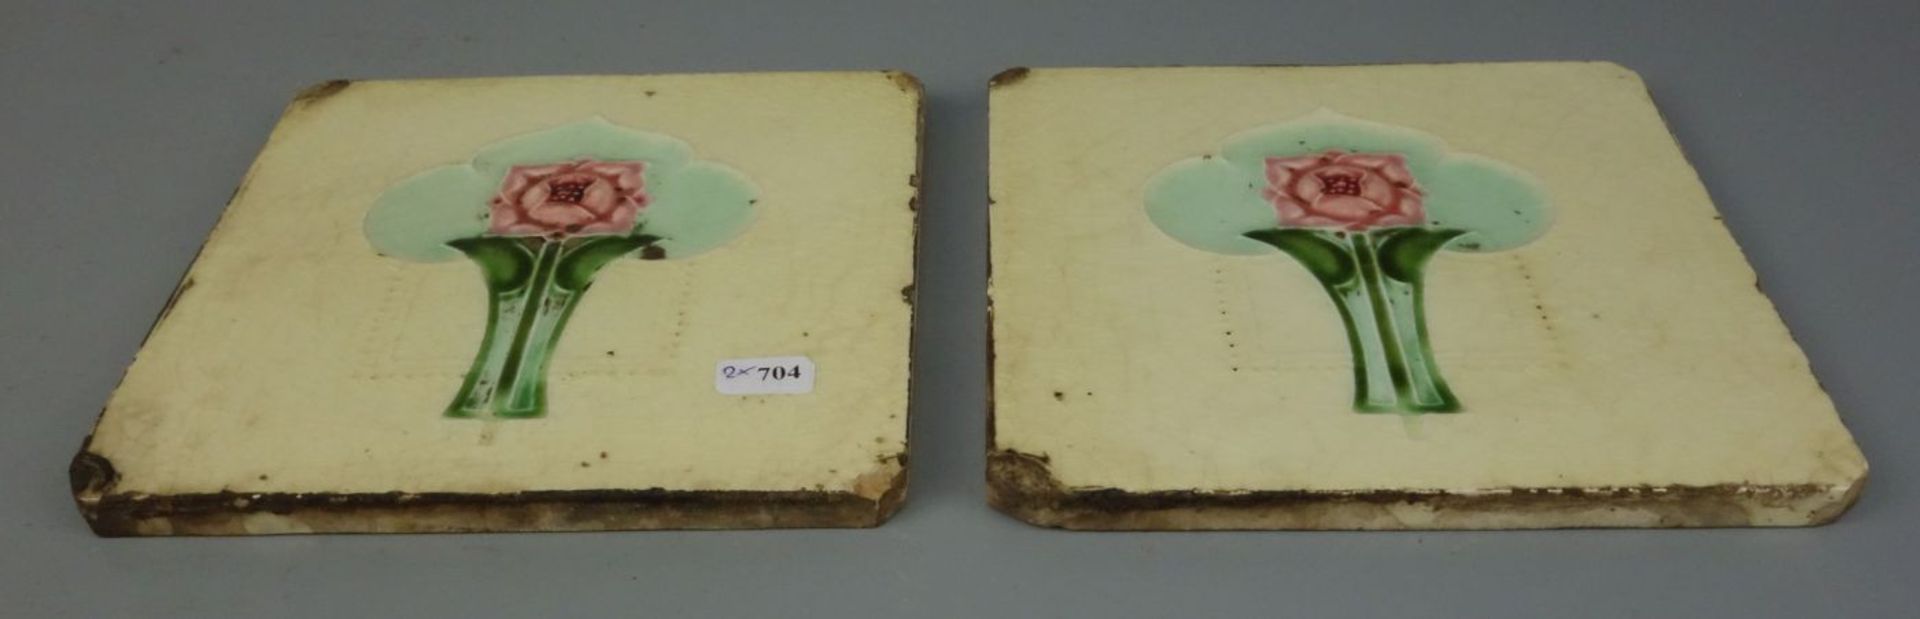 PAAR JUGENDSTIL-FLIESEN / two art nouveau tiles, um 1900, Keramik. Manufaktur Minton & Hollins / - Image 2 of 3